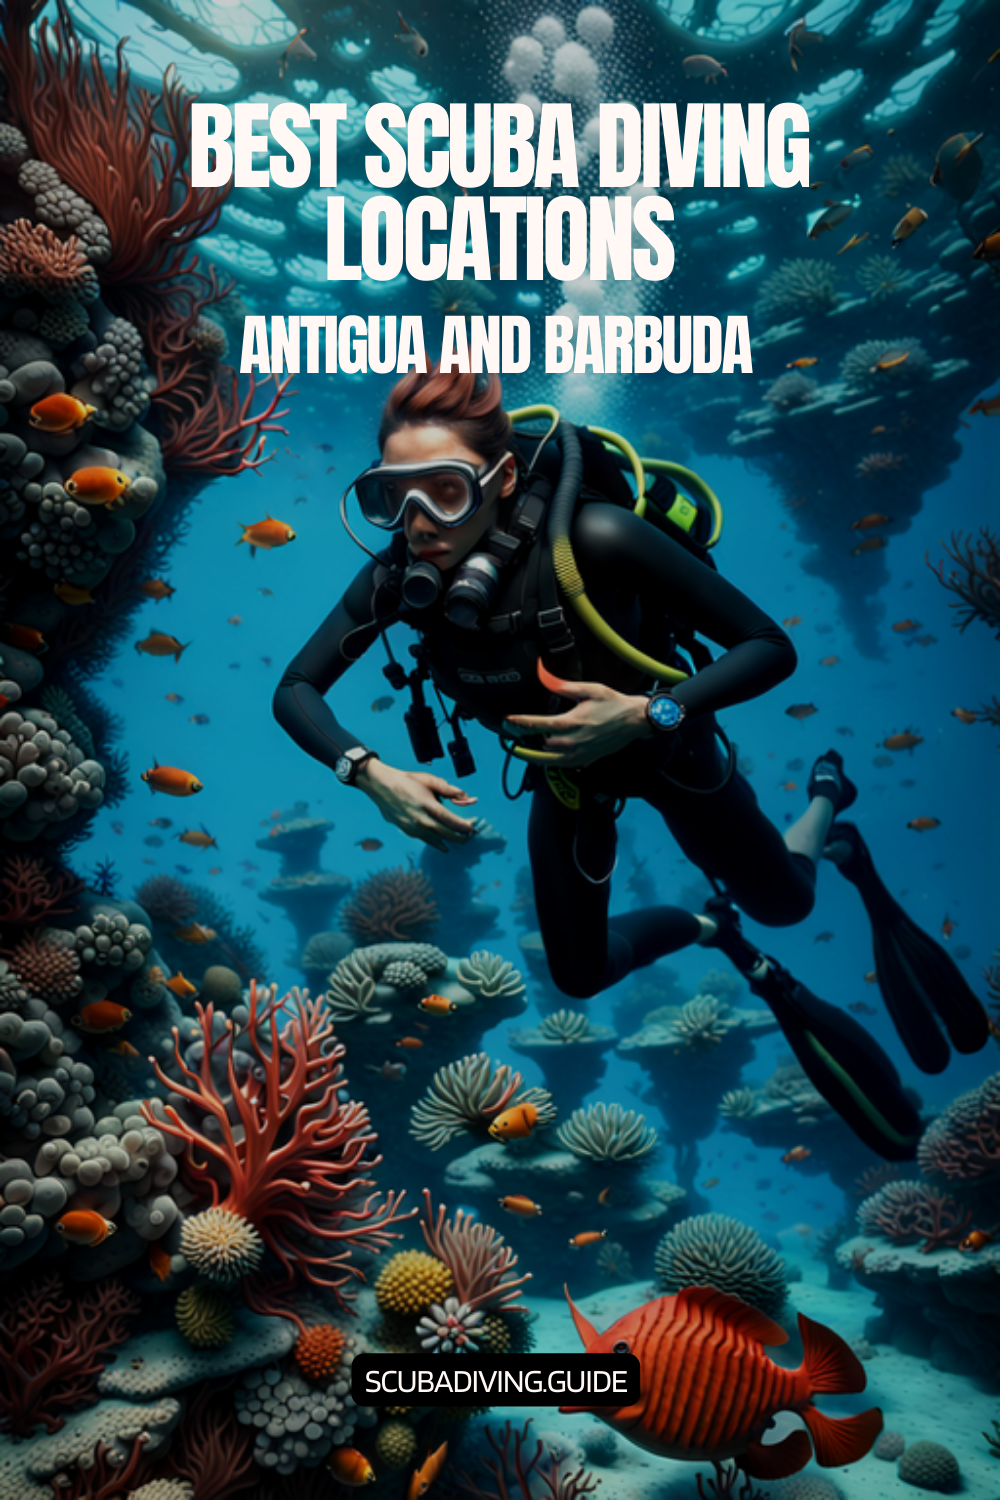 Scuba Diving Locations in Antigua and Barbuda